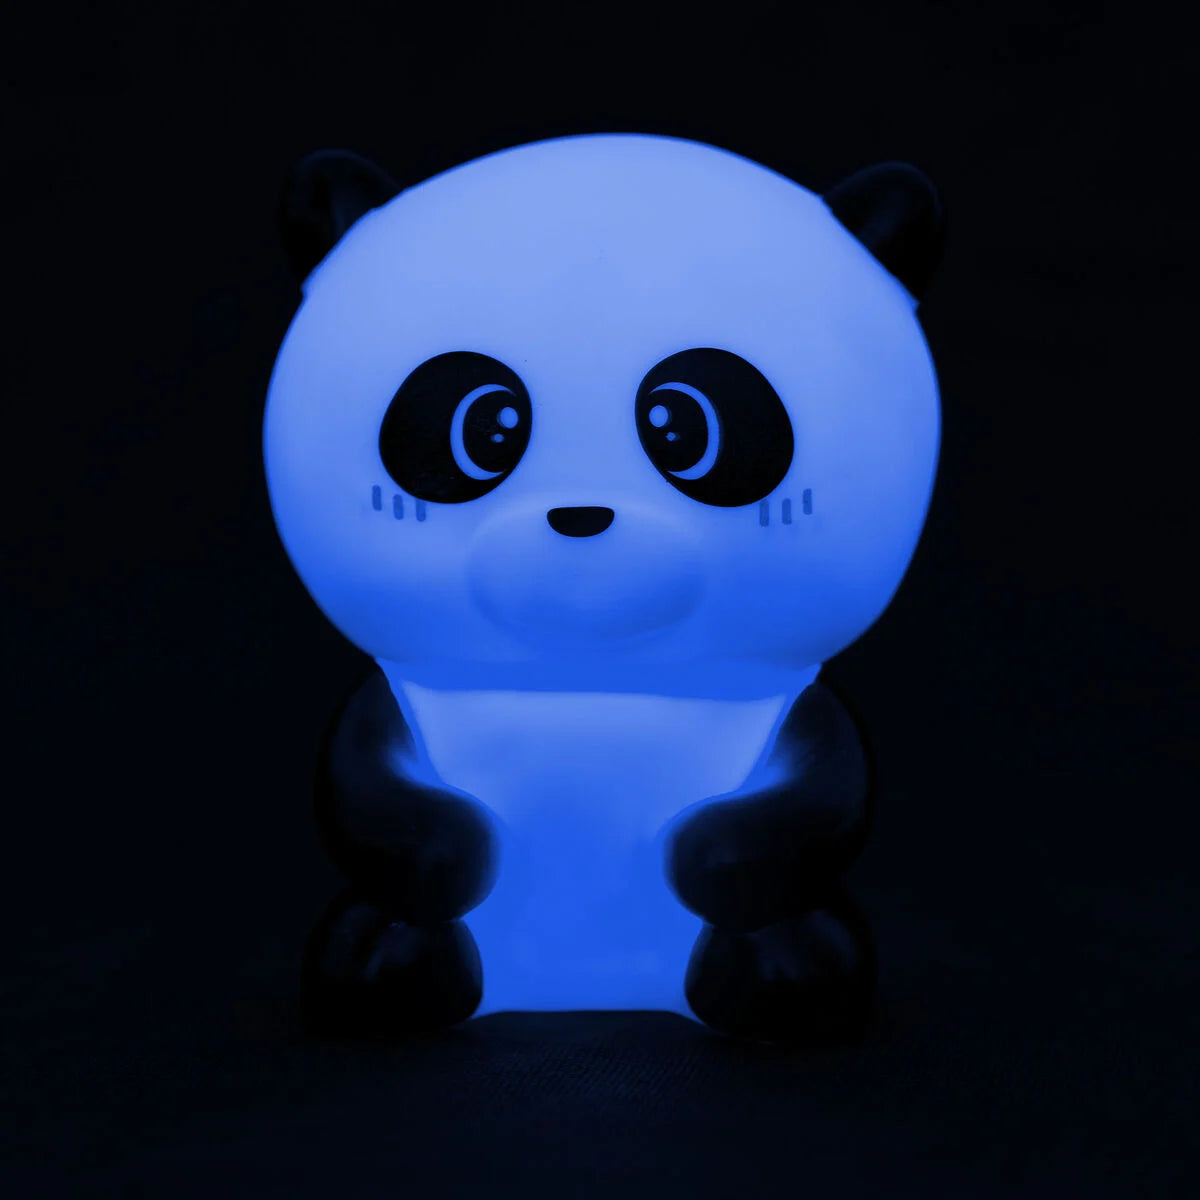 Fab Gifts  Legami Sweet Dreams Night Light Panda Weirs of Baggot St